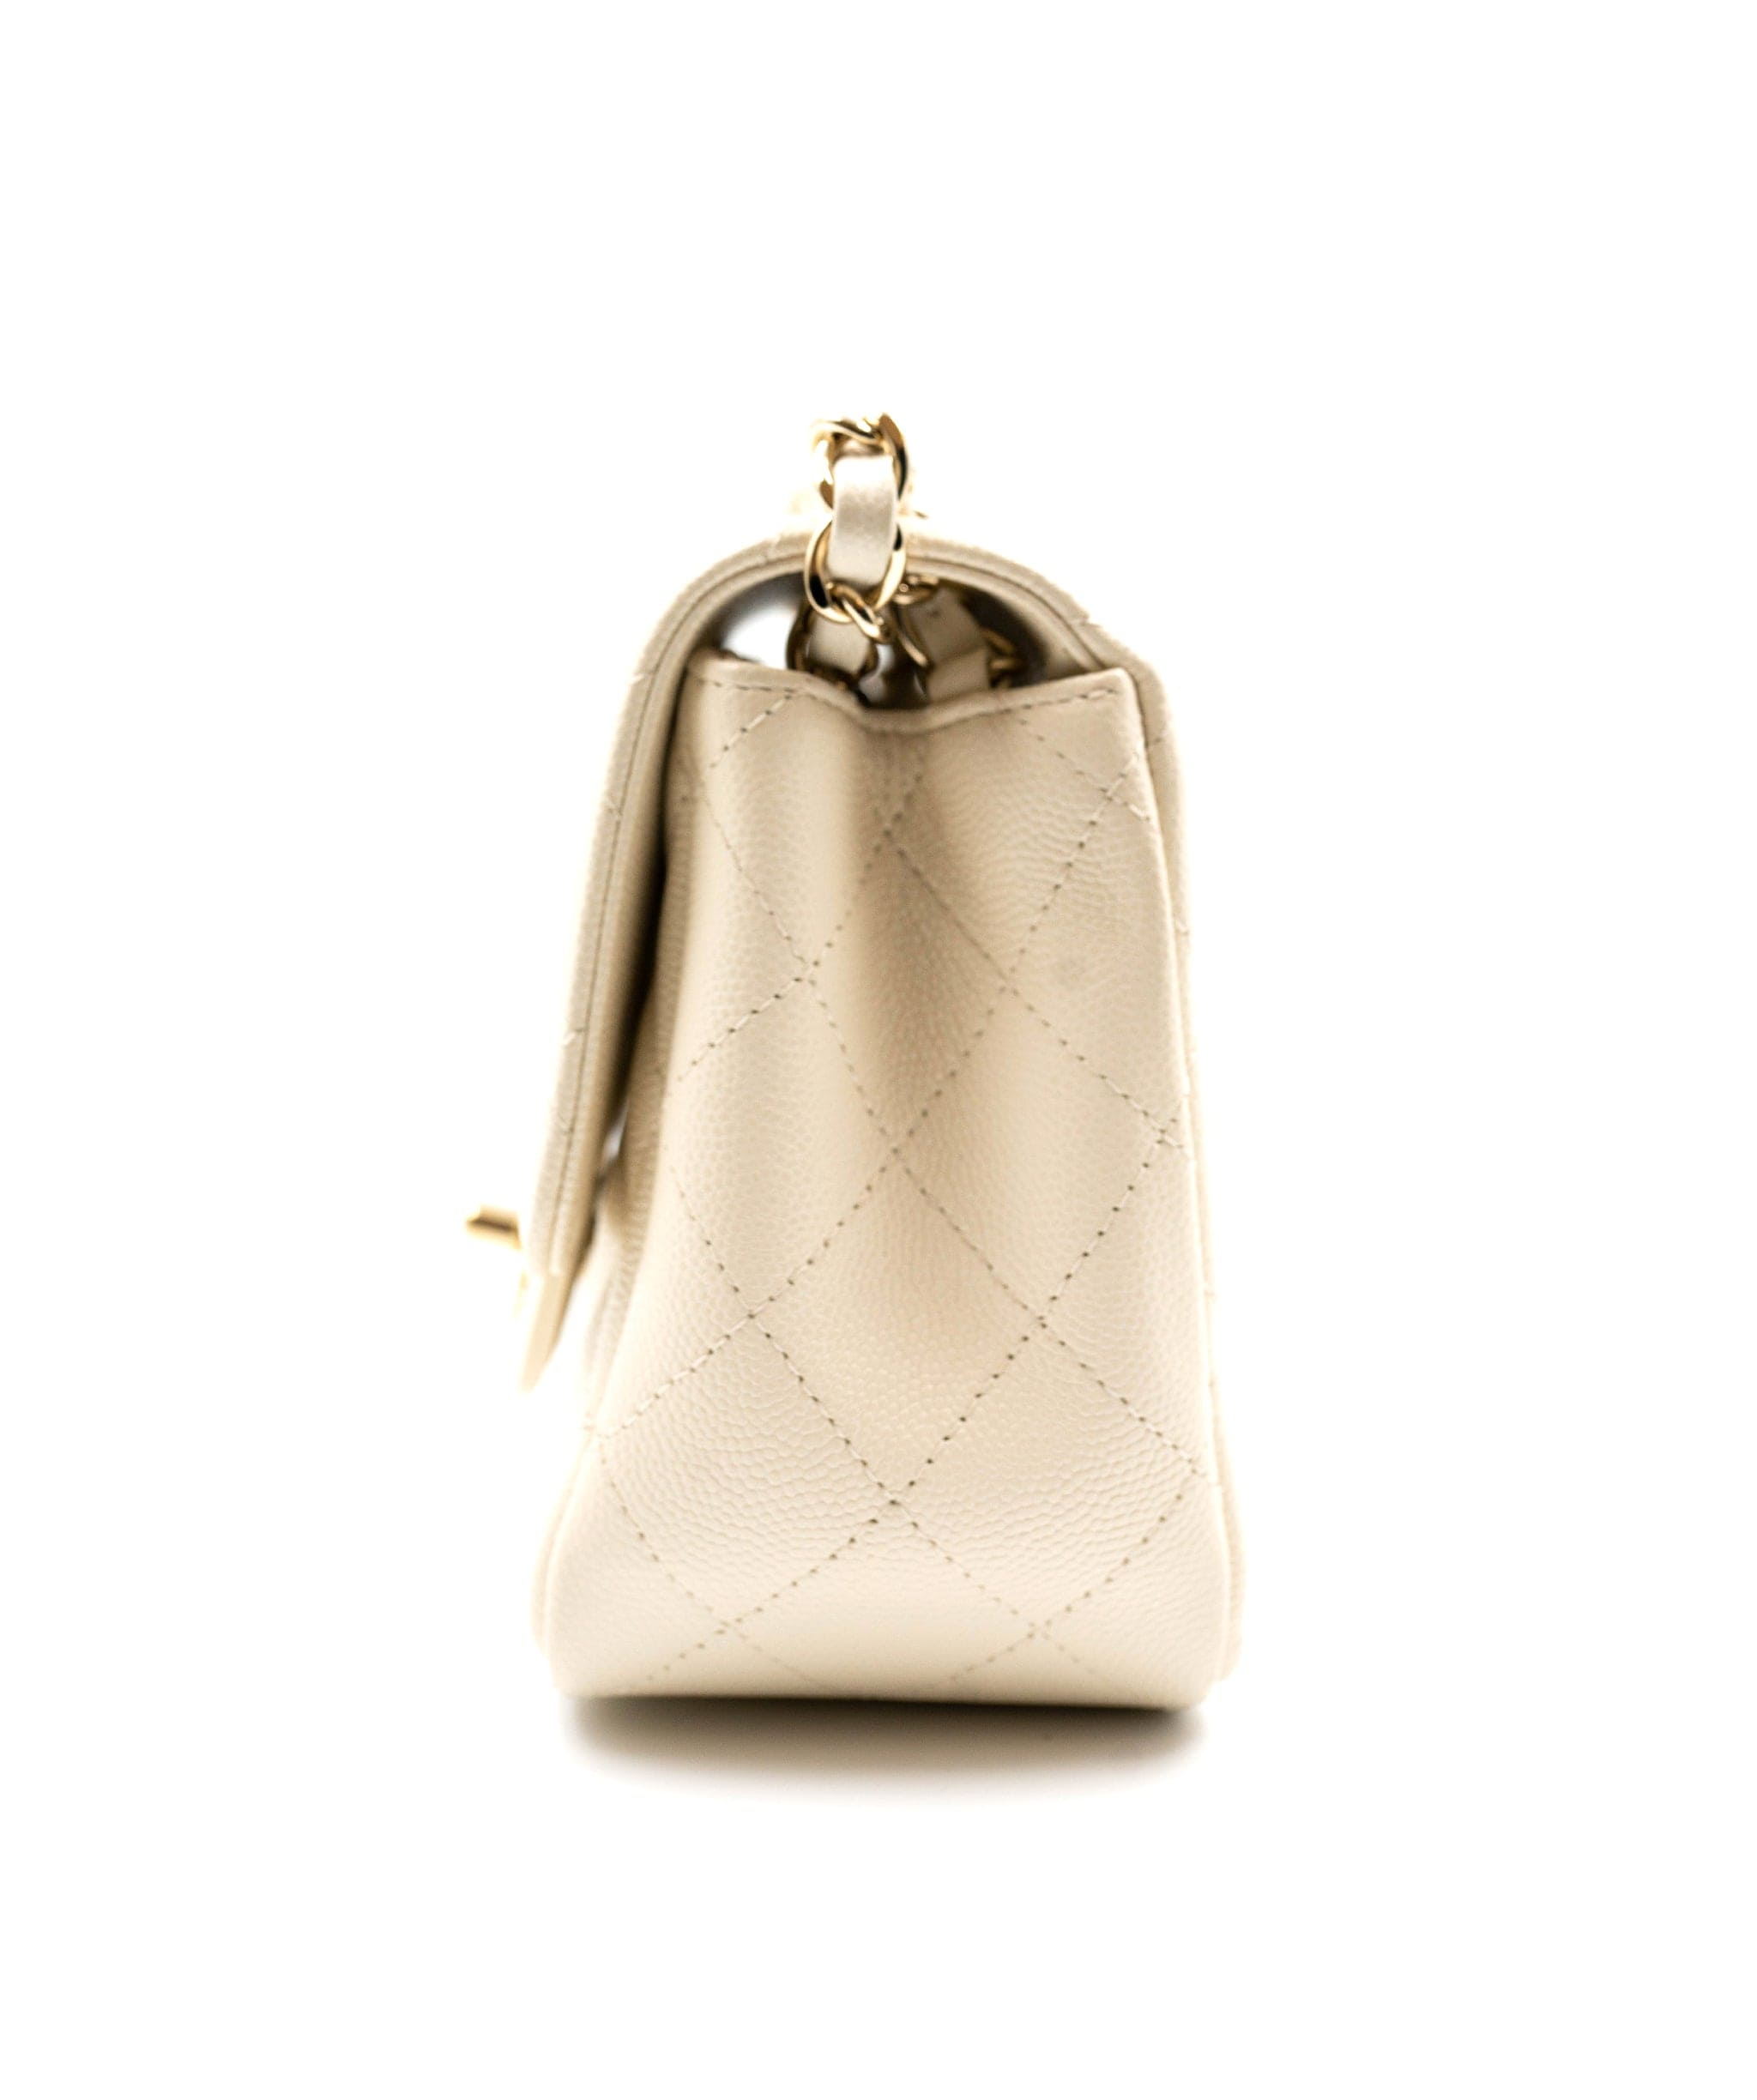 Chanel Chanel Classic Mini Flap Bag in White caviar ghw AGC1198